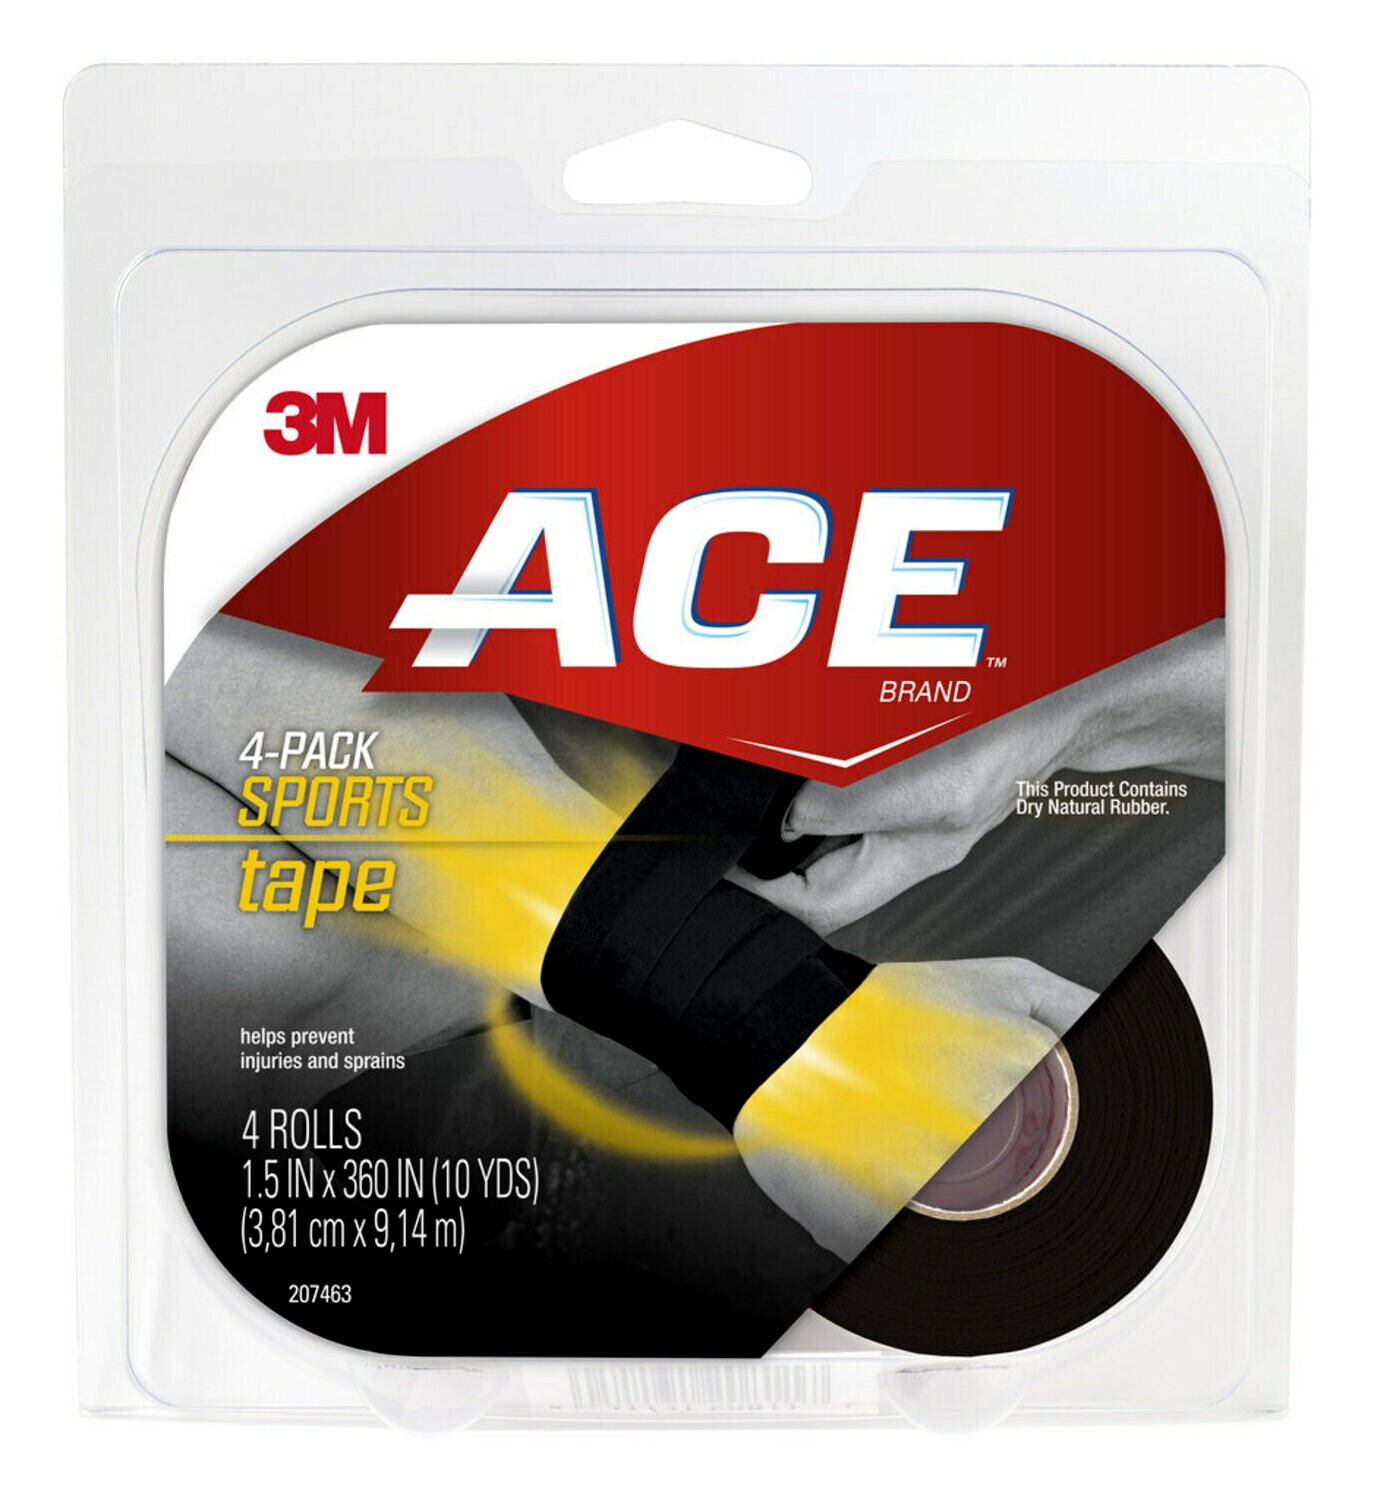 7100207210 - ACE Sports Tape, 4-Pack, 207463, 1.5 in x 360 in (10 yd) in (3.81 cm x
9.14 m) Black Tape